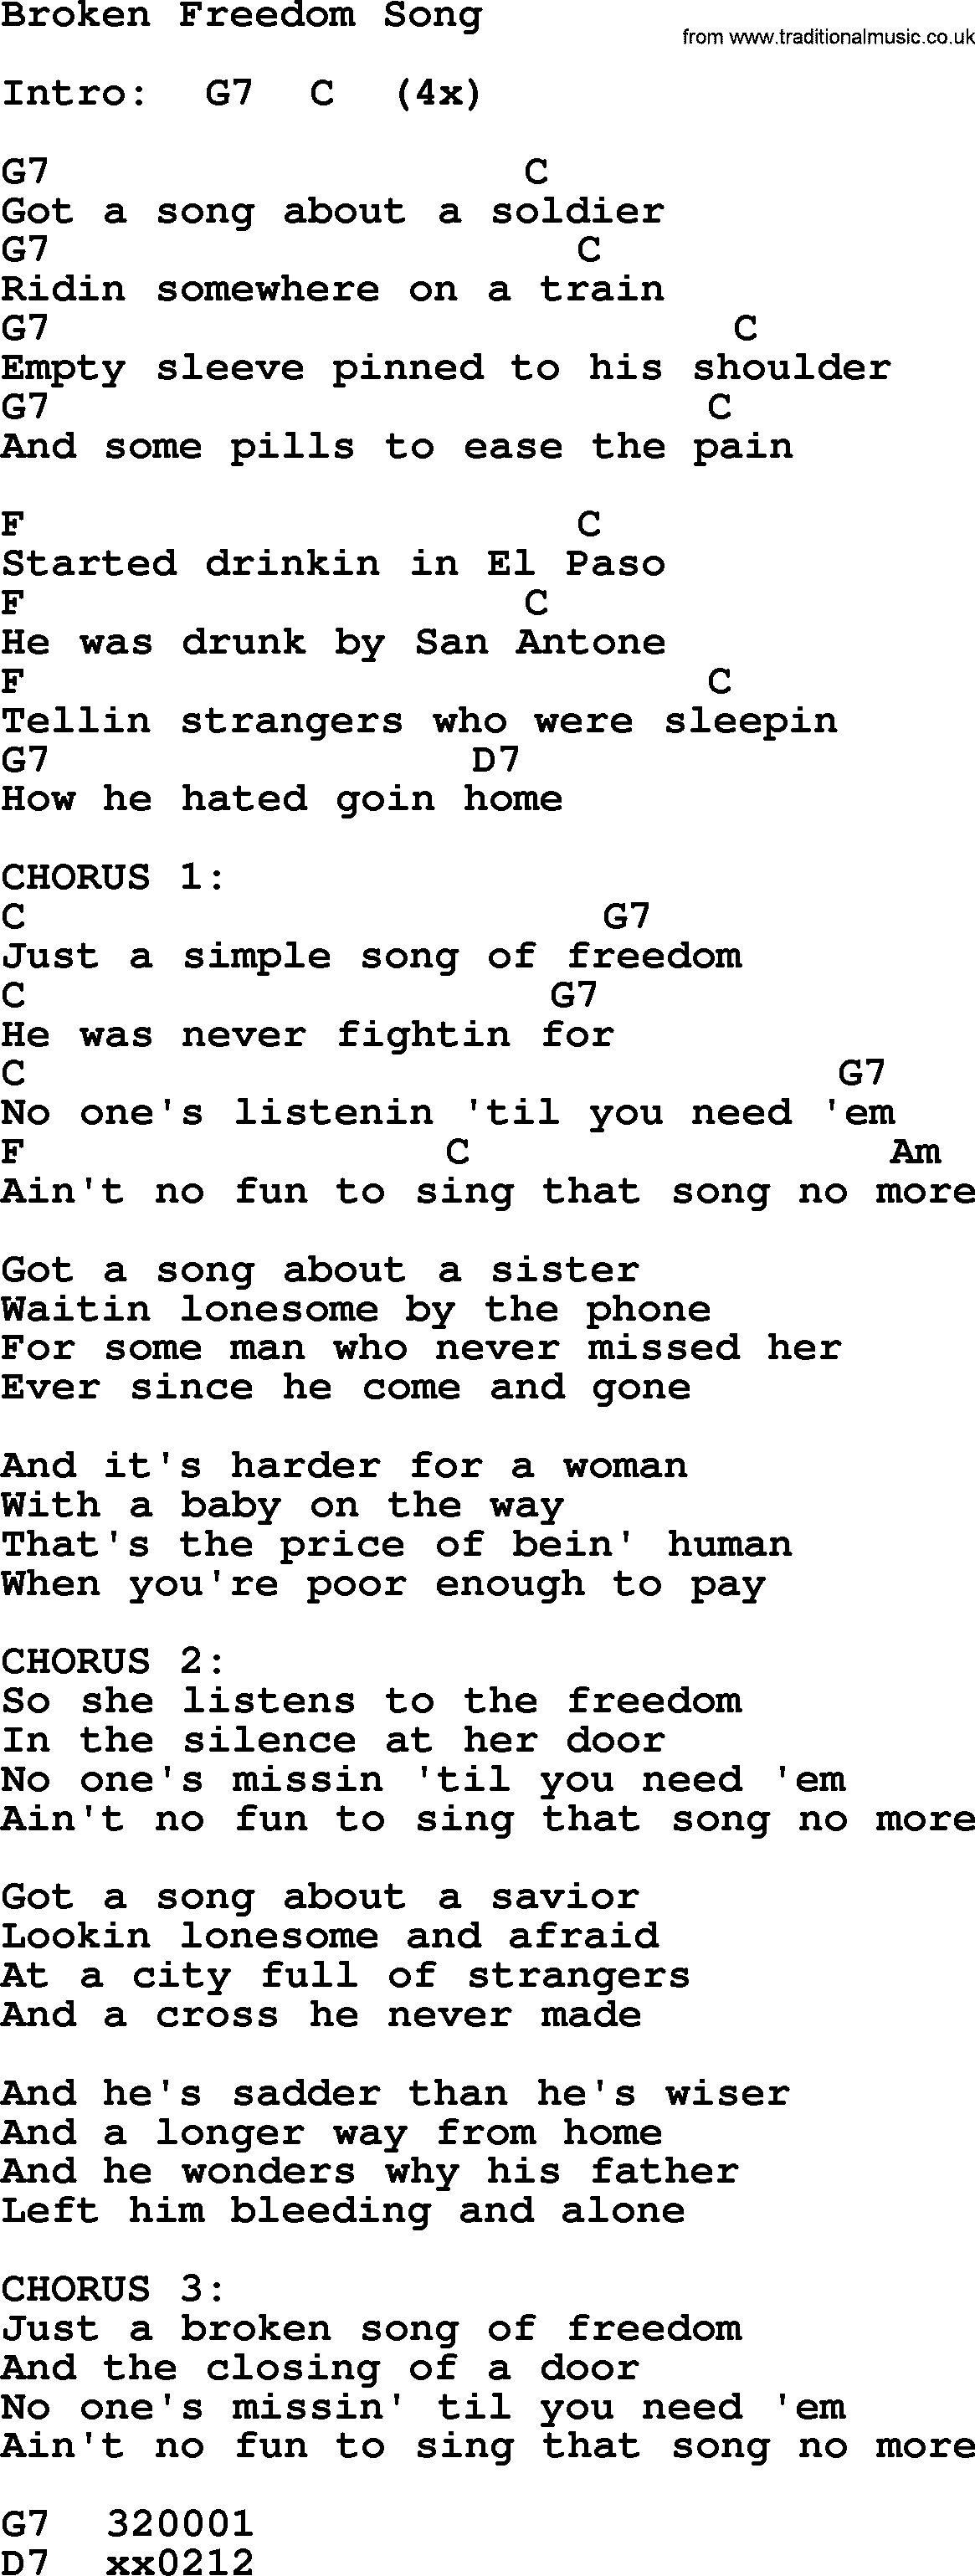 Kris Kristofferson song: Broken Freedom Song lyrics and chords